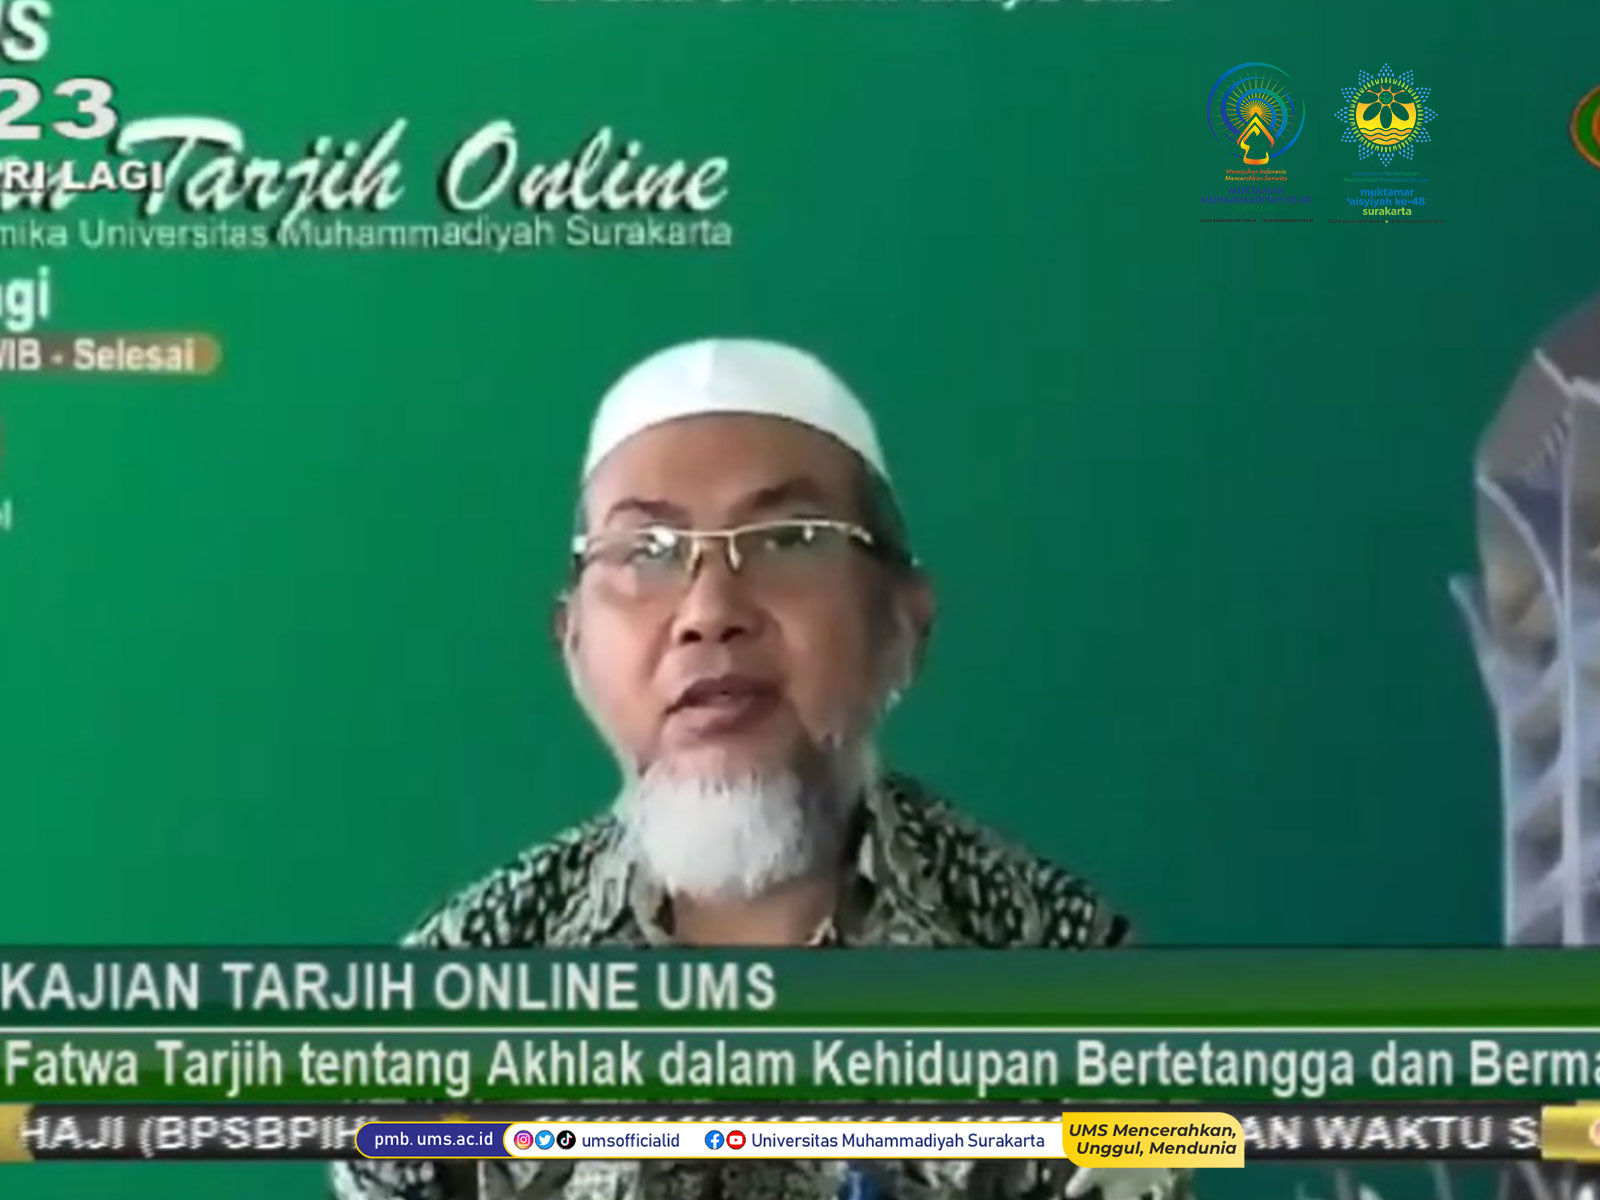 You are currently viewing Akhlak dalam Kehidupan Bertetangga dan Bermasyarakat sesuai Tarjih Muhammadiyah